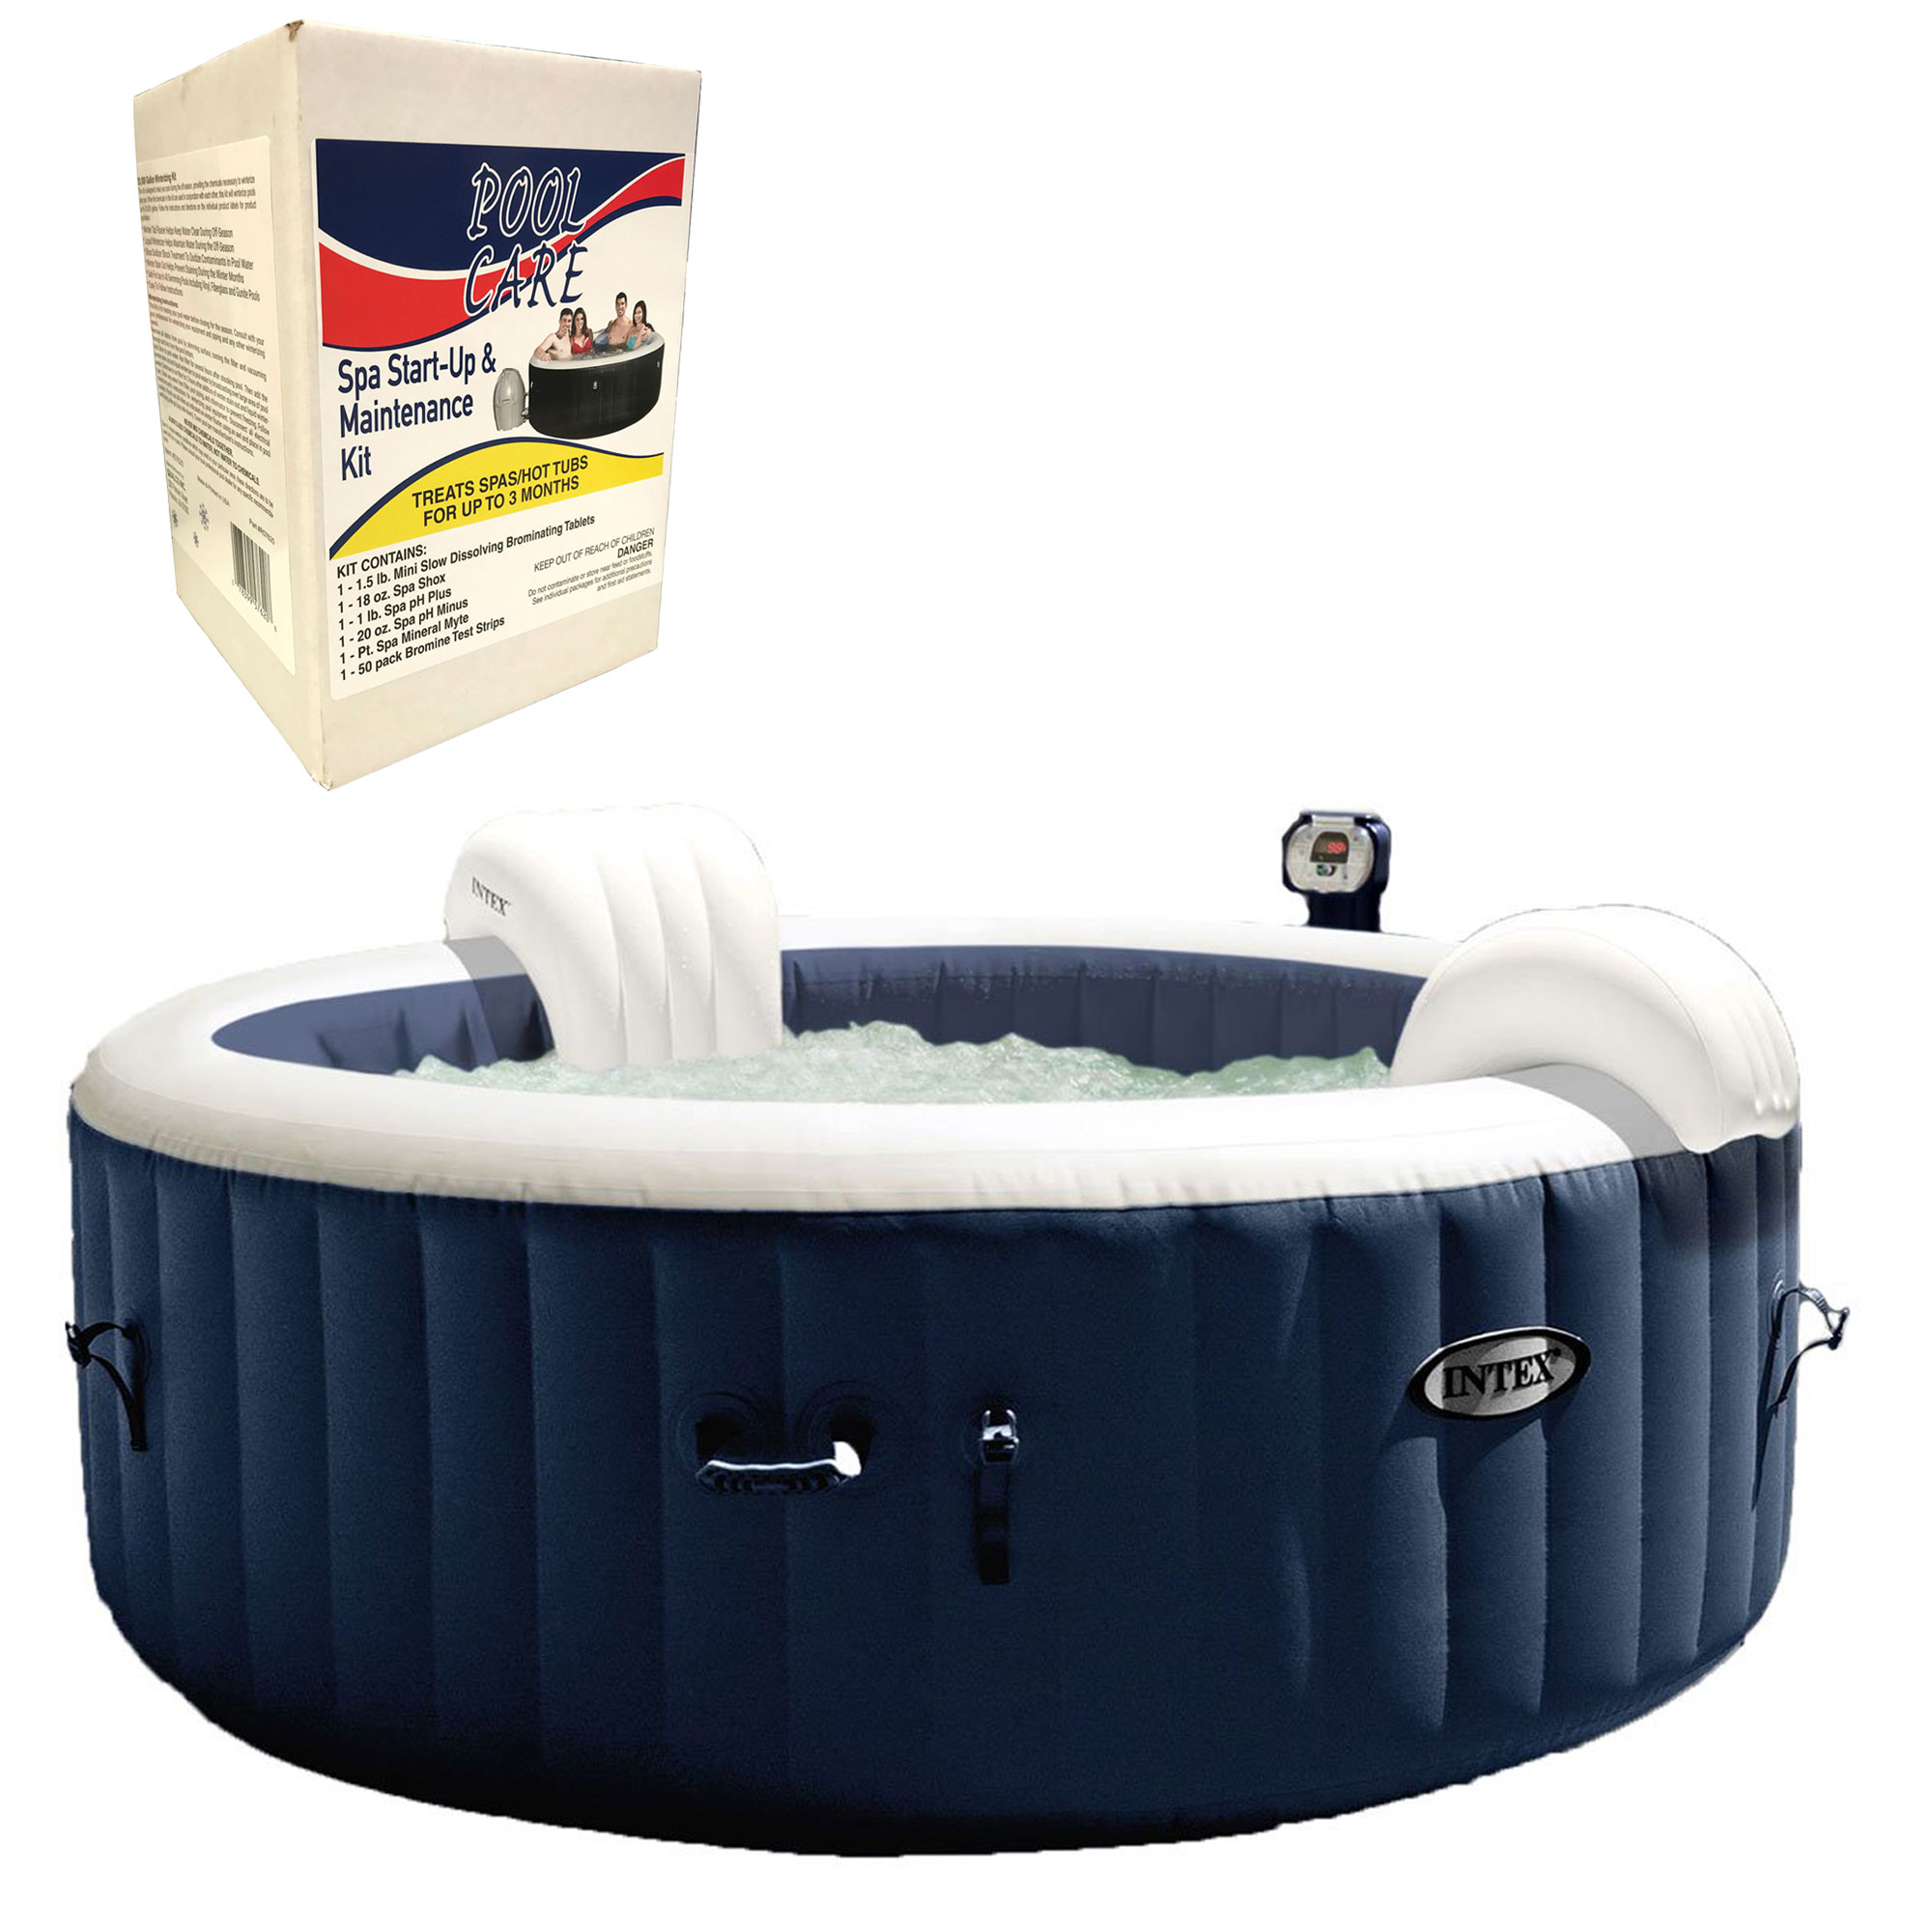 Intex Pure Spa Inflatable Hot Tub Spa Maintenance Kit